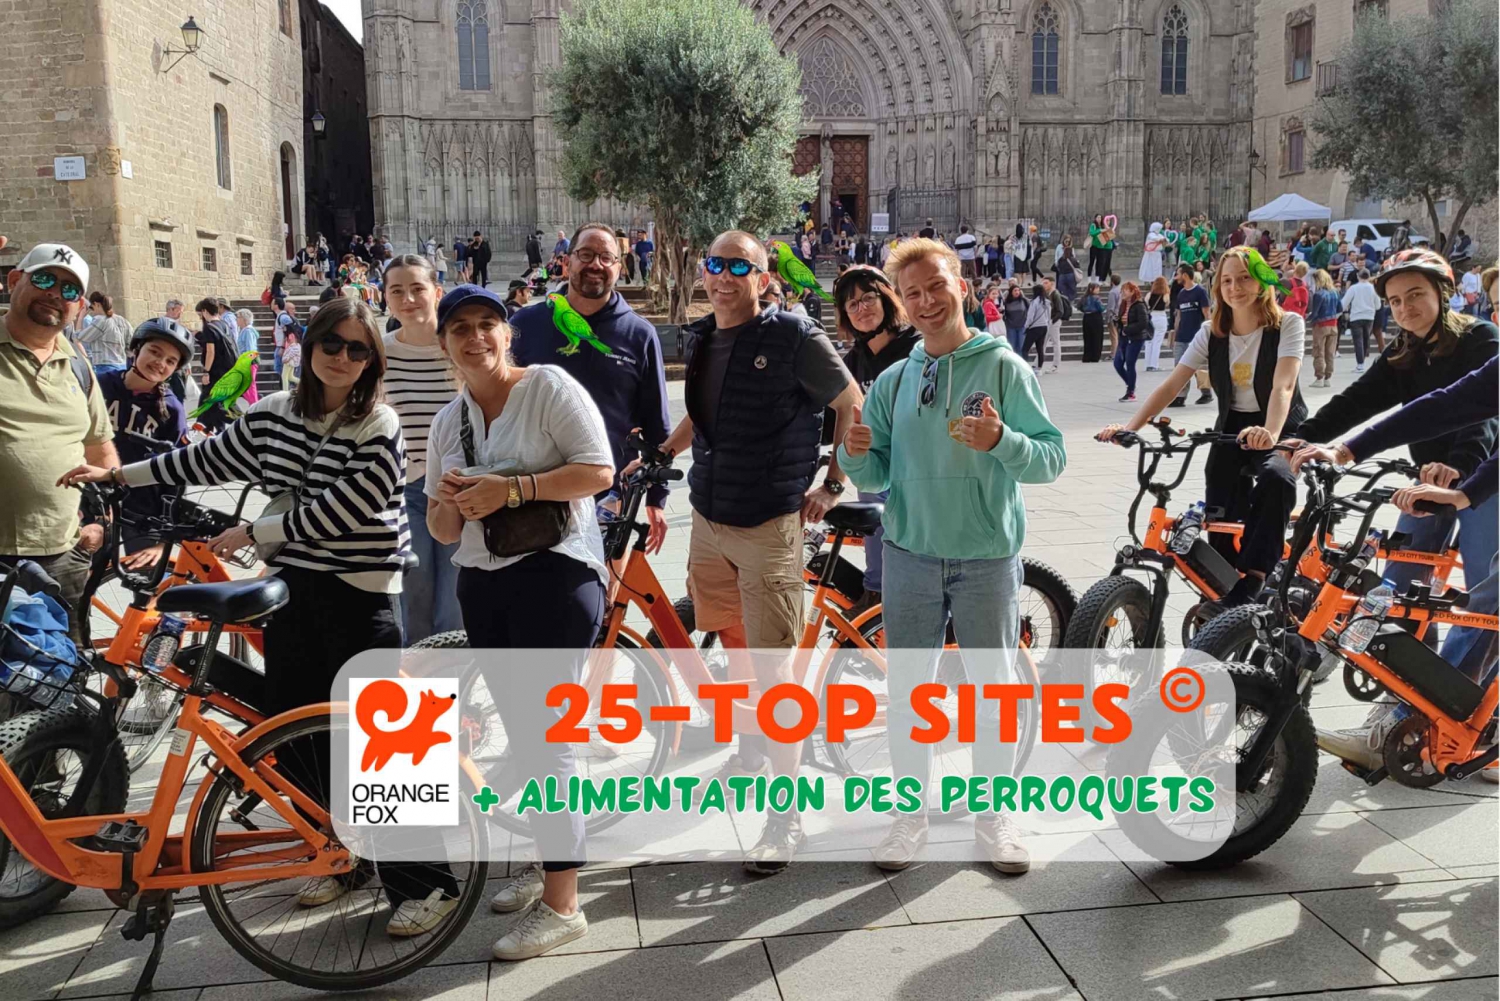 Barcelona Tour💕 med fransk guide 25-тop platser, cykel/ebike